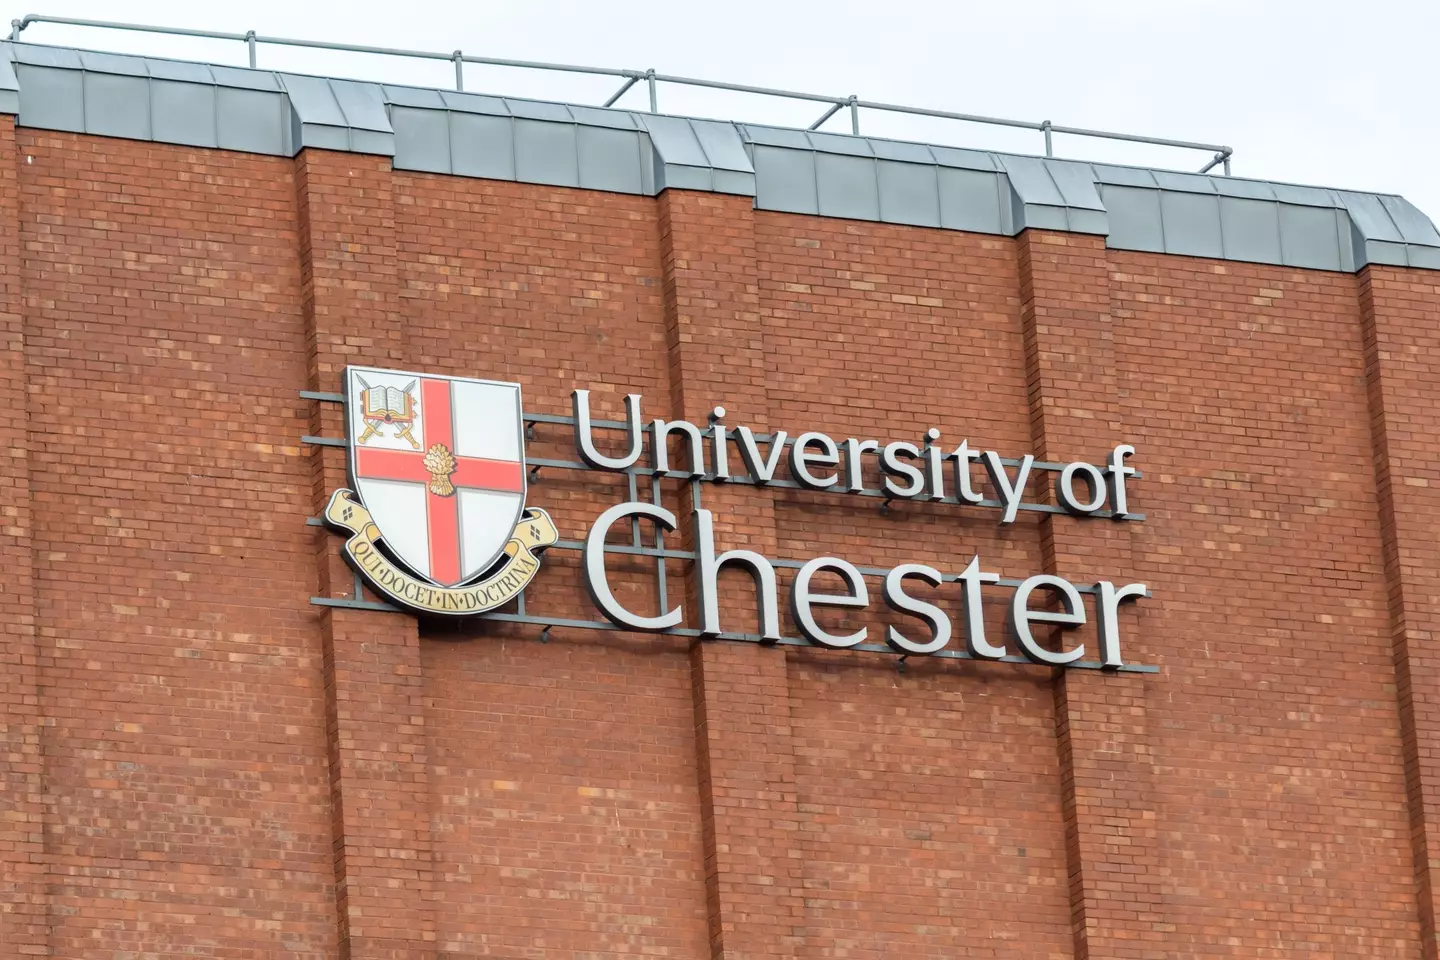 The University of Chester slapped the warning on Harry Potter books.